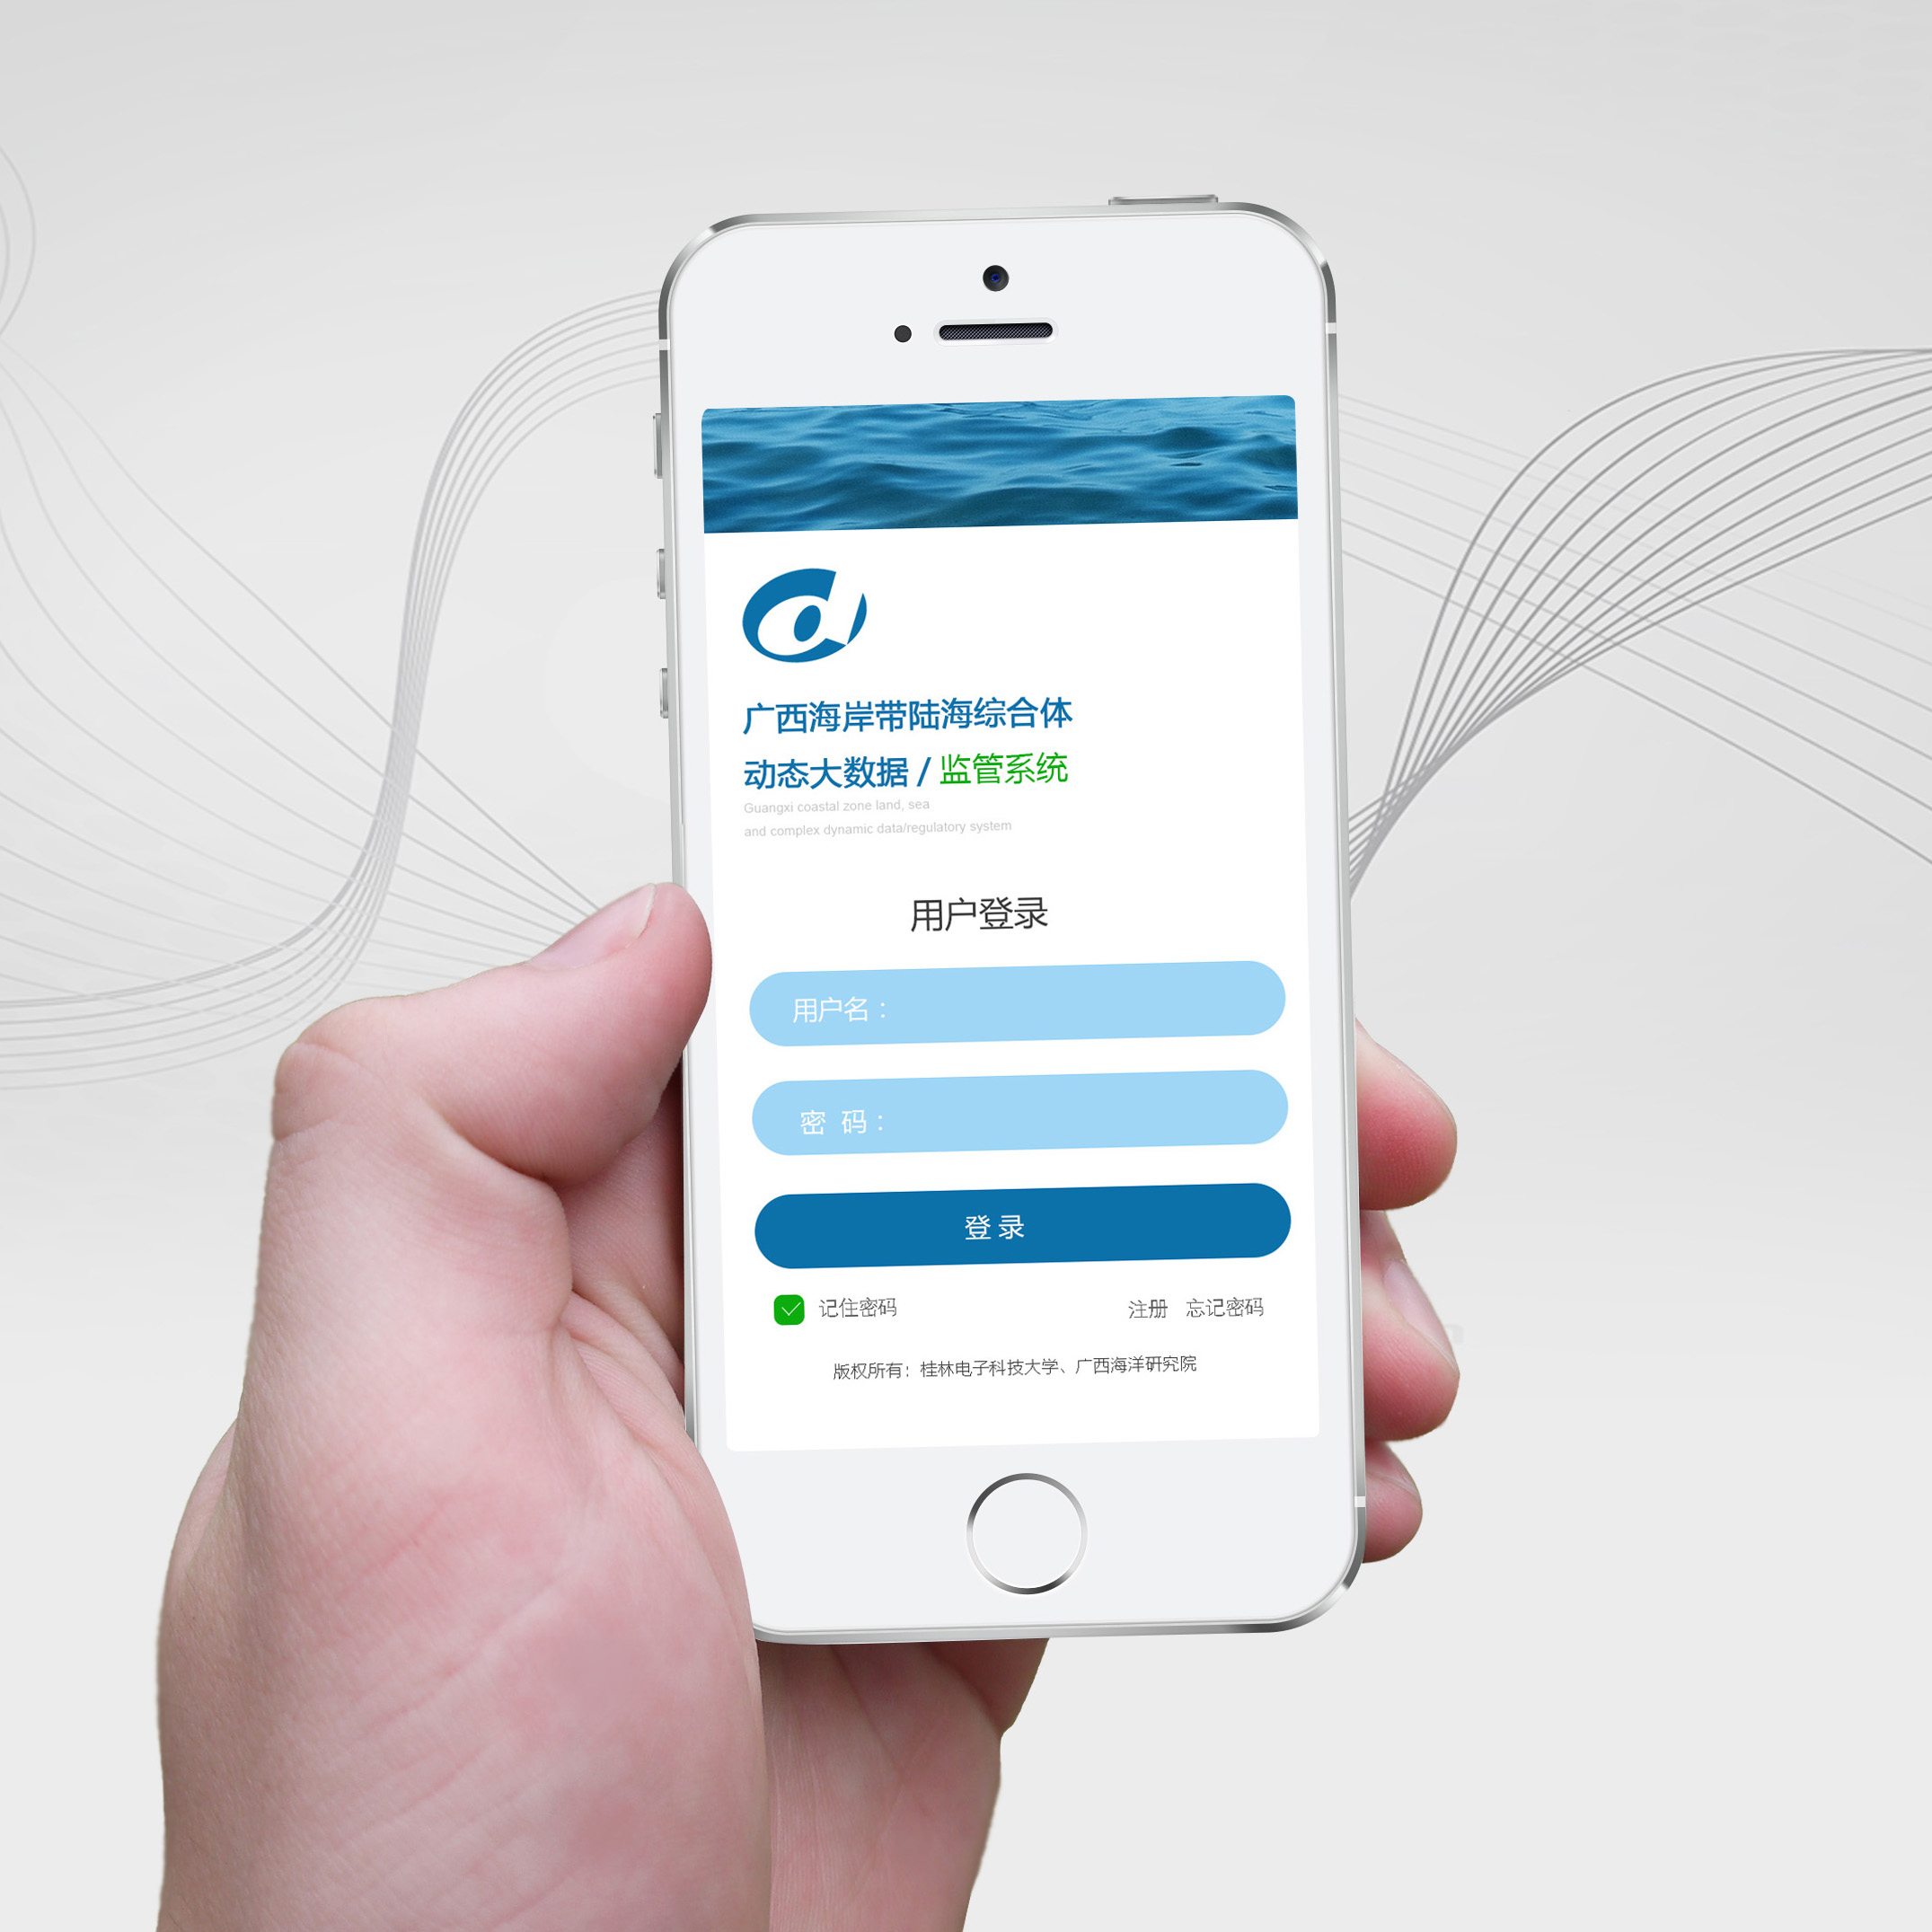 Big data platform interaction design for Guangxi Academy of Oceanography